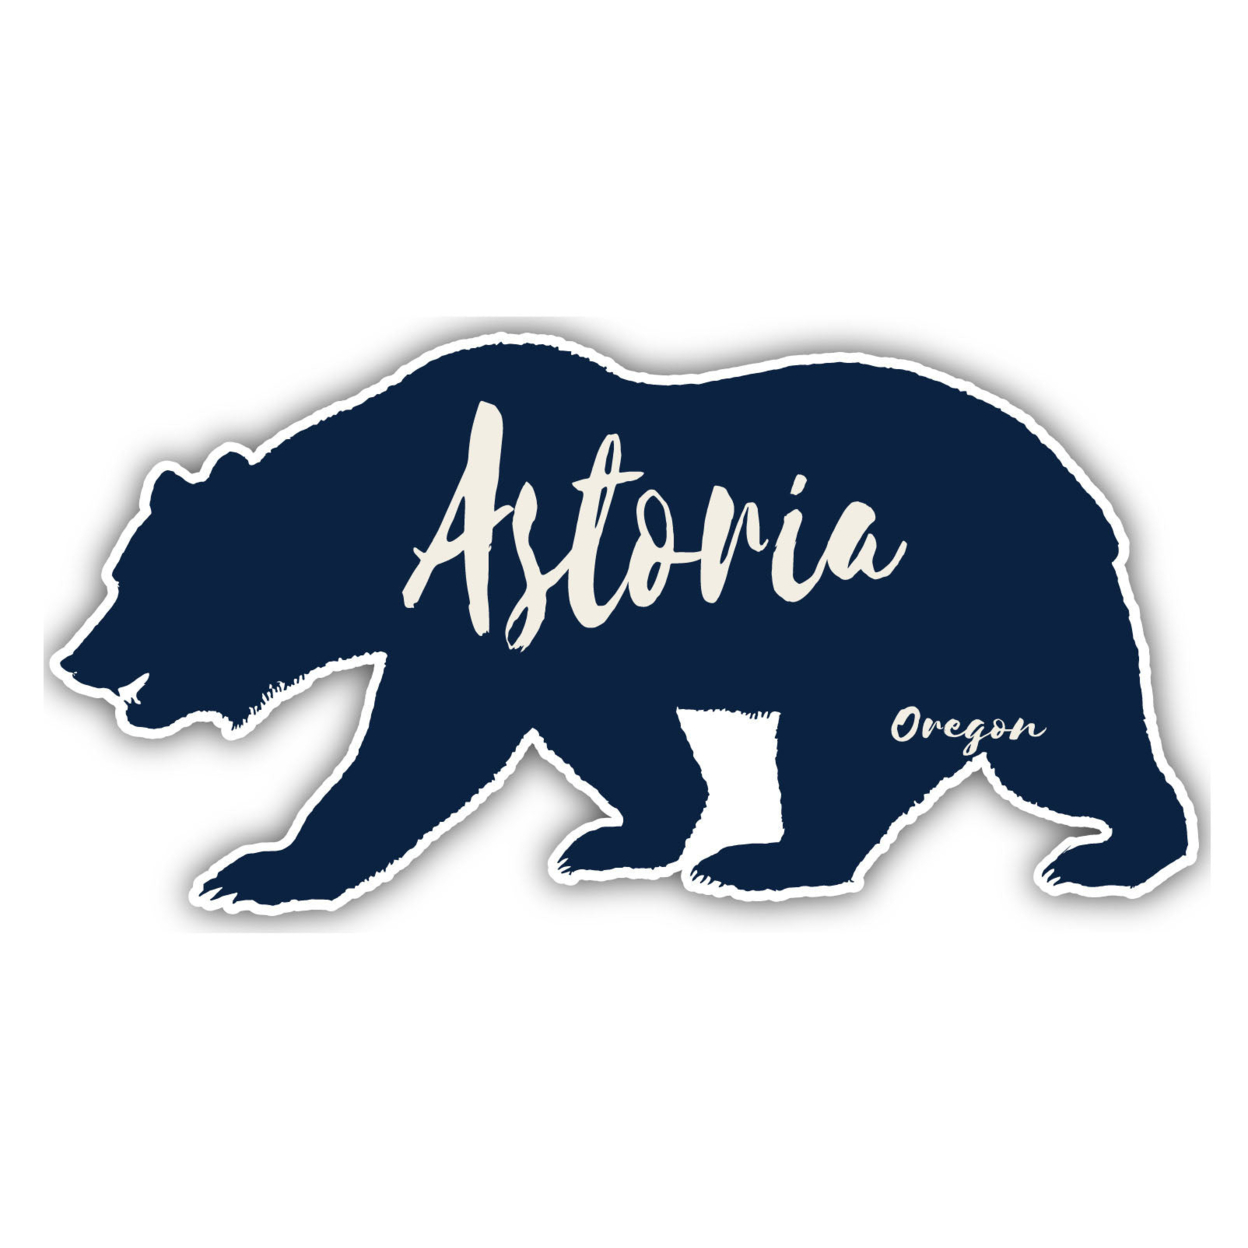 Astoria Oregon Souvenir Decorative Stickers (Choose Theme And Size) - 4-Pack, 12-Inch, Bear